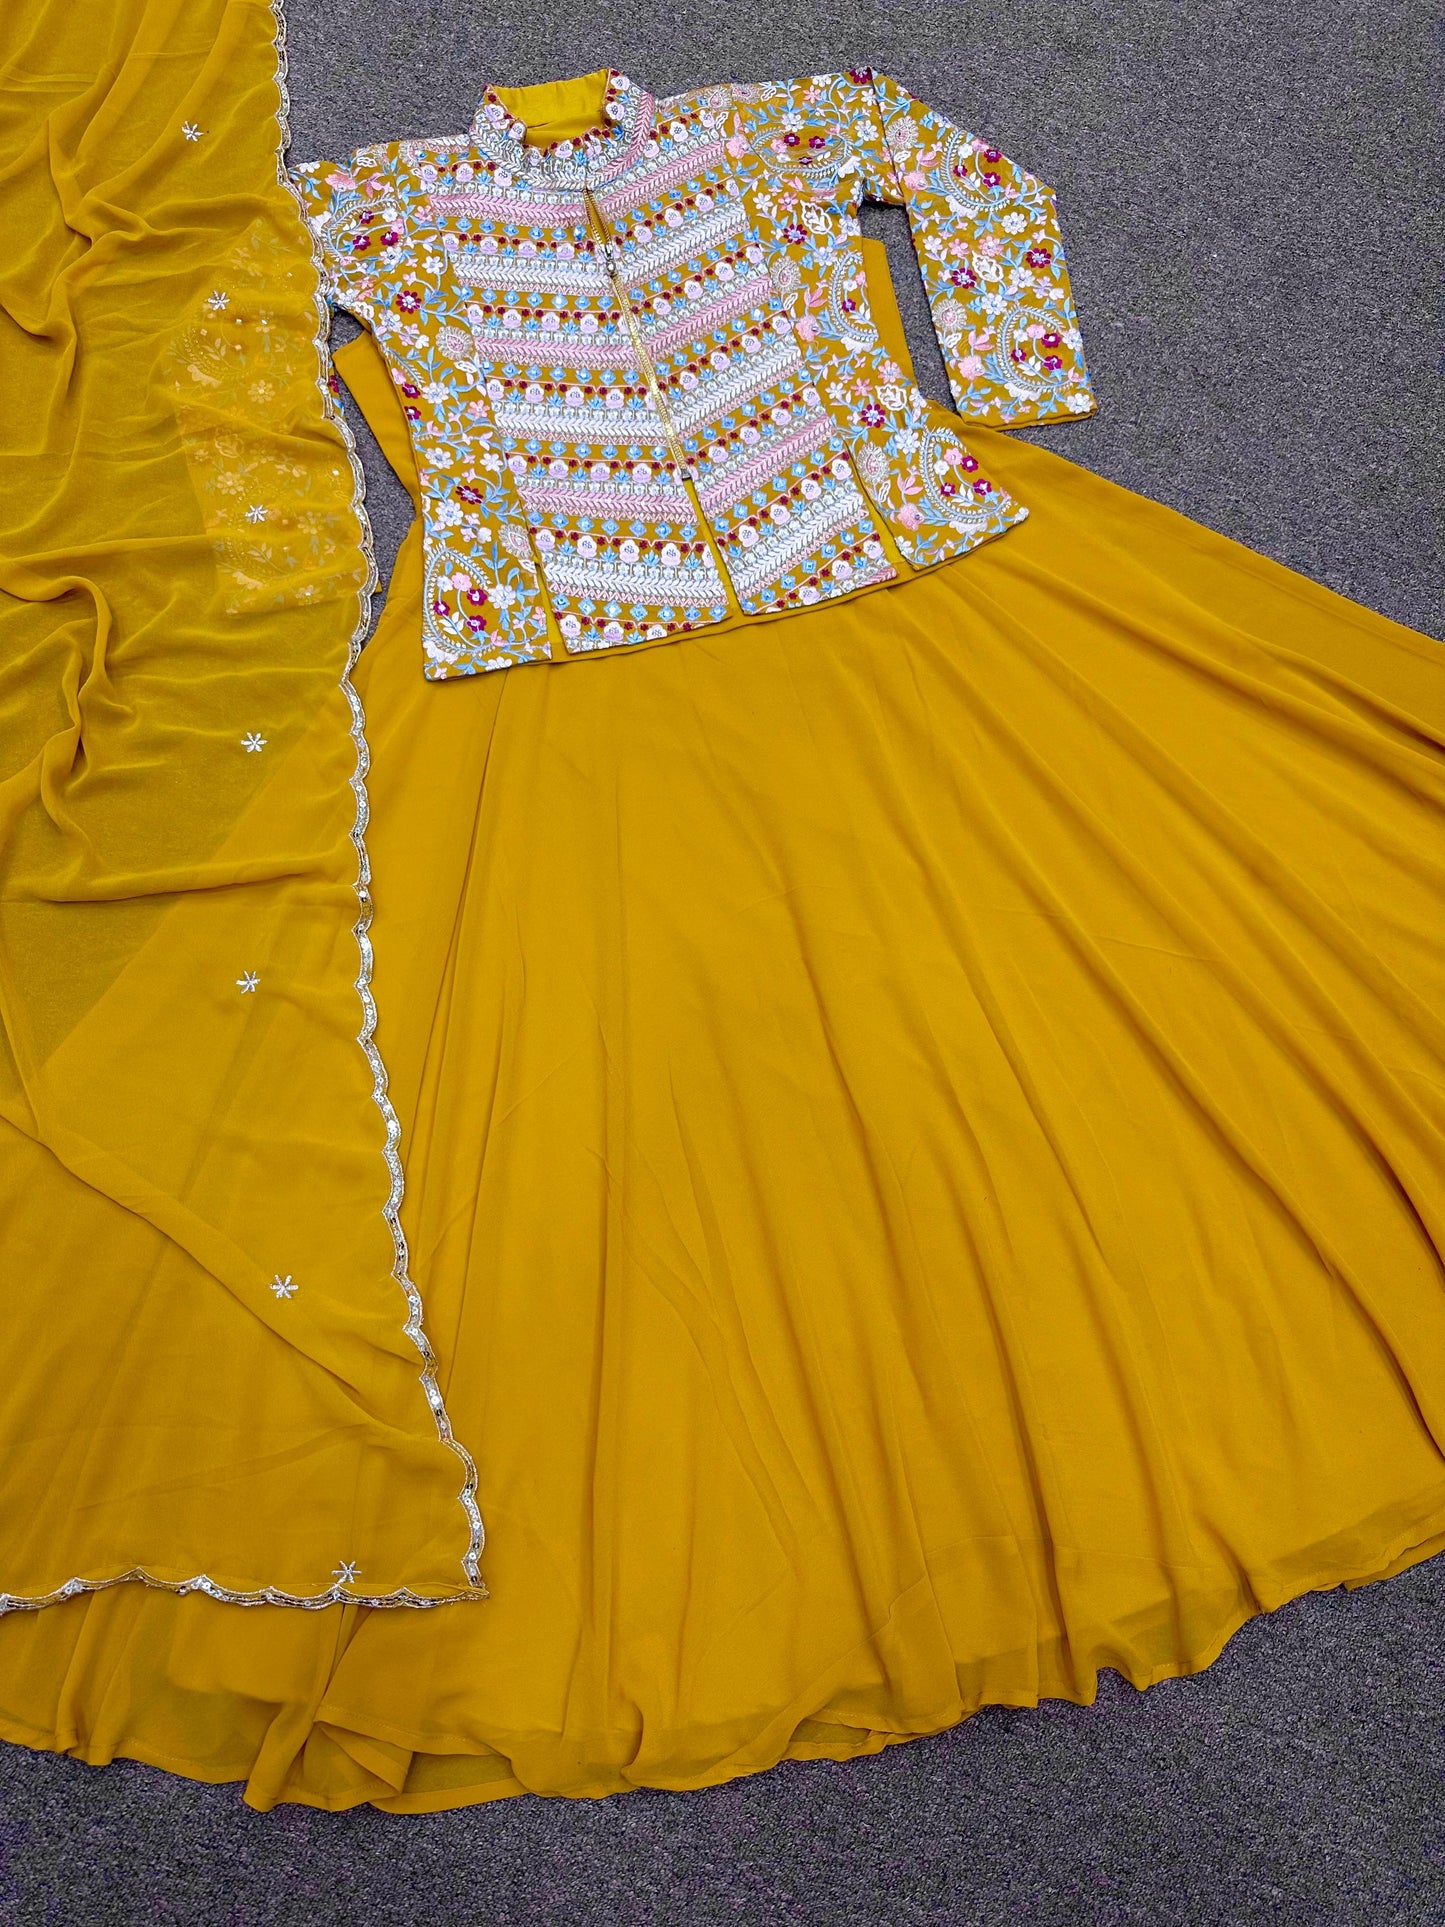 Haldi Wear Yellow Plain Gown With Beautiful Work Koti